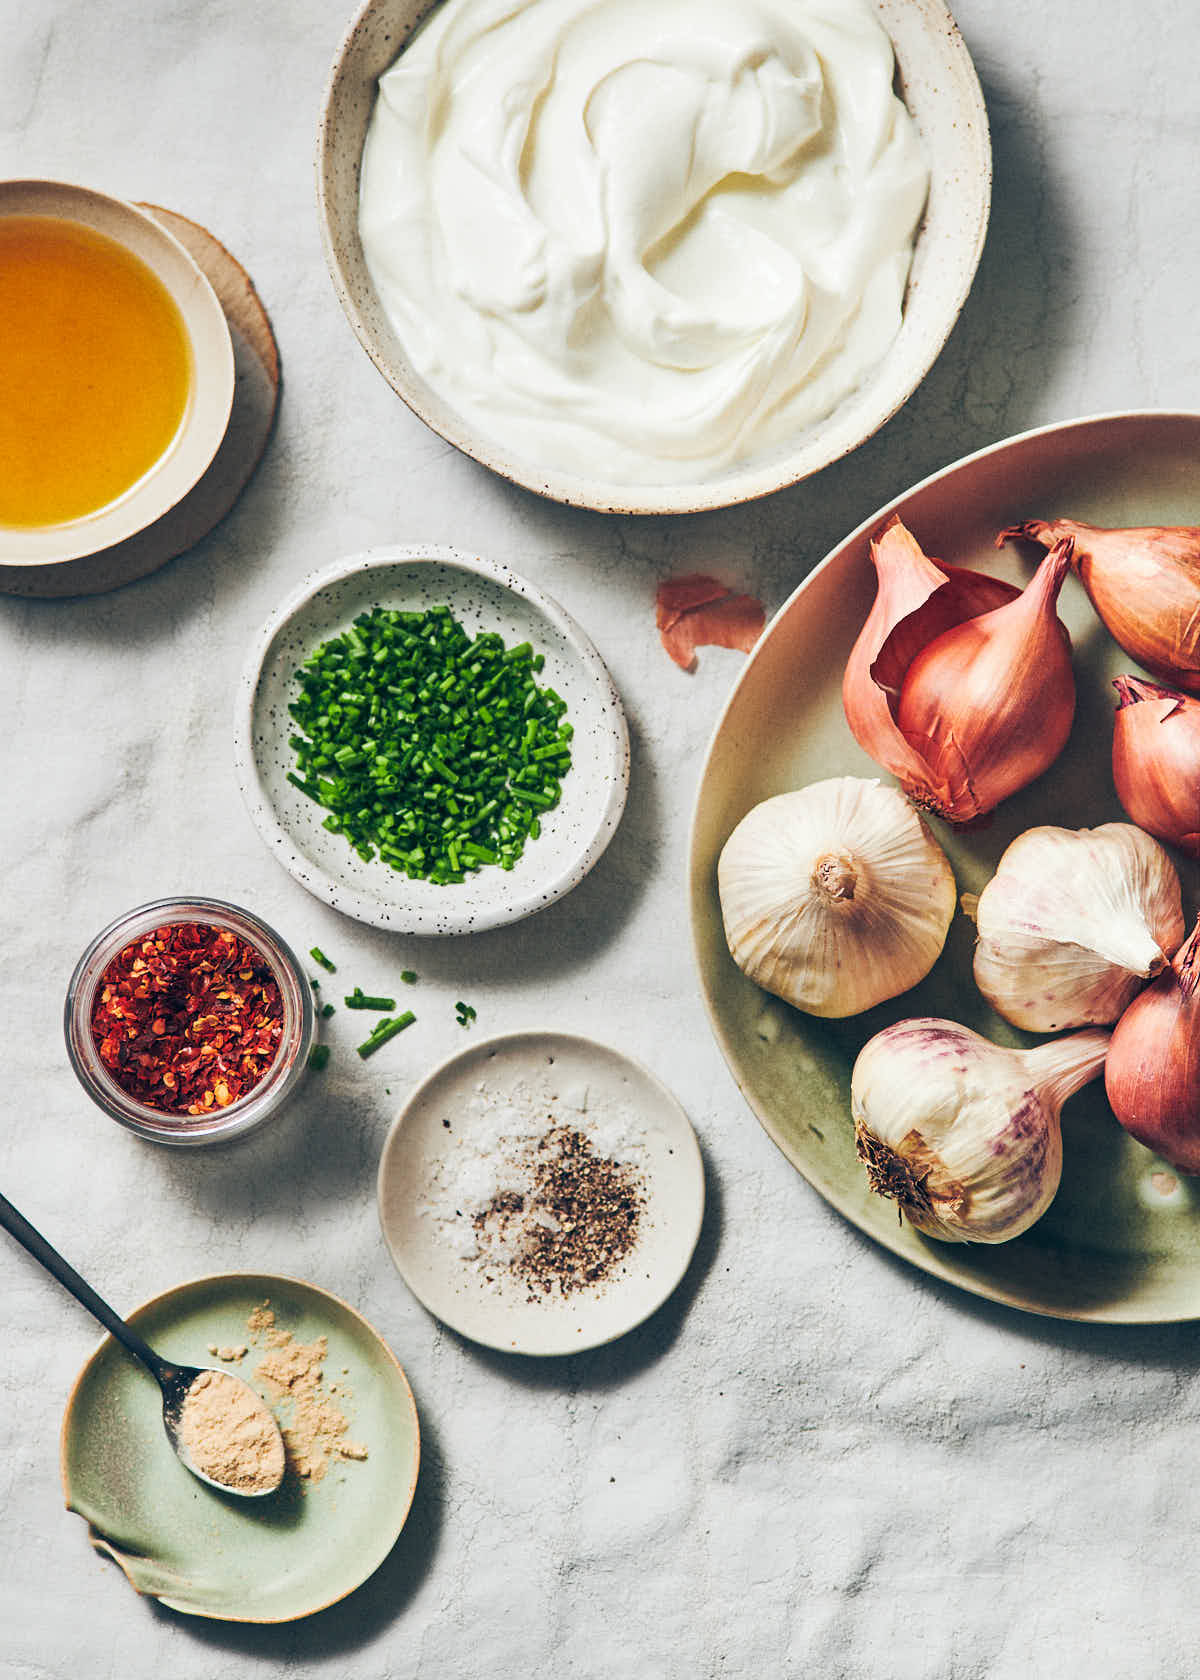 Ingredients to make Greek Yogurt onion dip: yogurt, fresh chives, chili flakes, olive oil, garlic, shallot, and garlic powder.